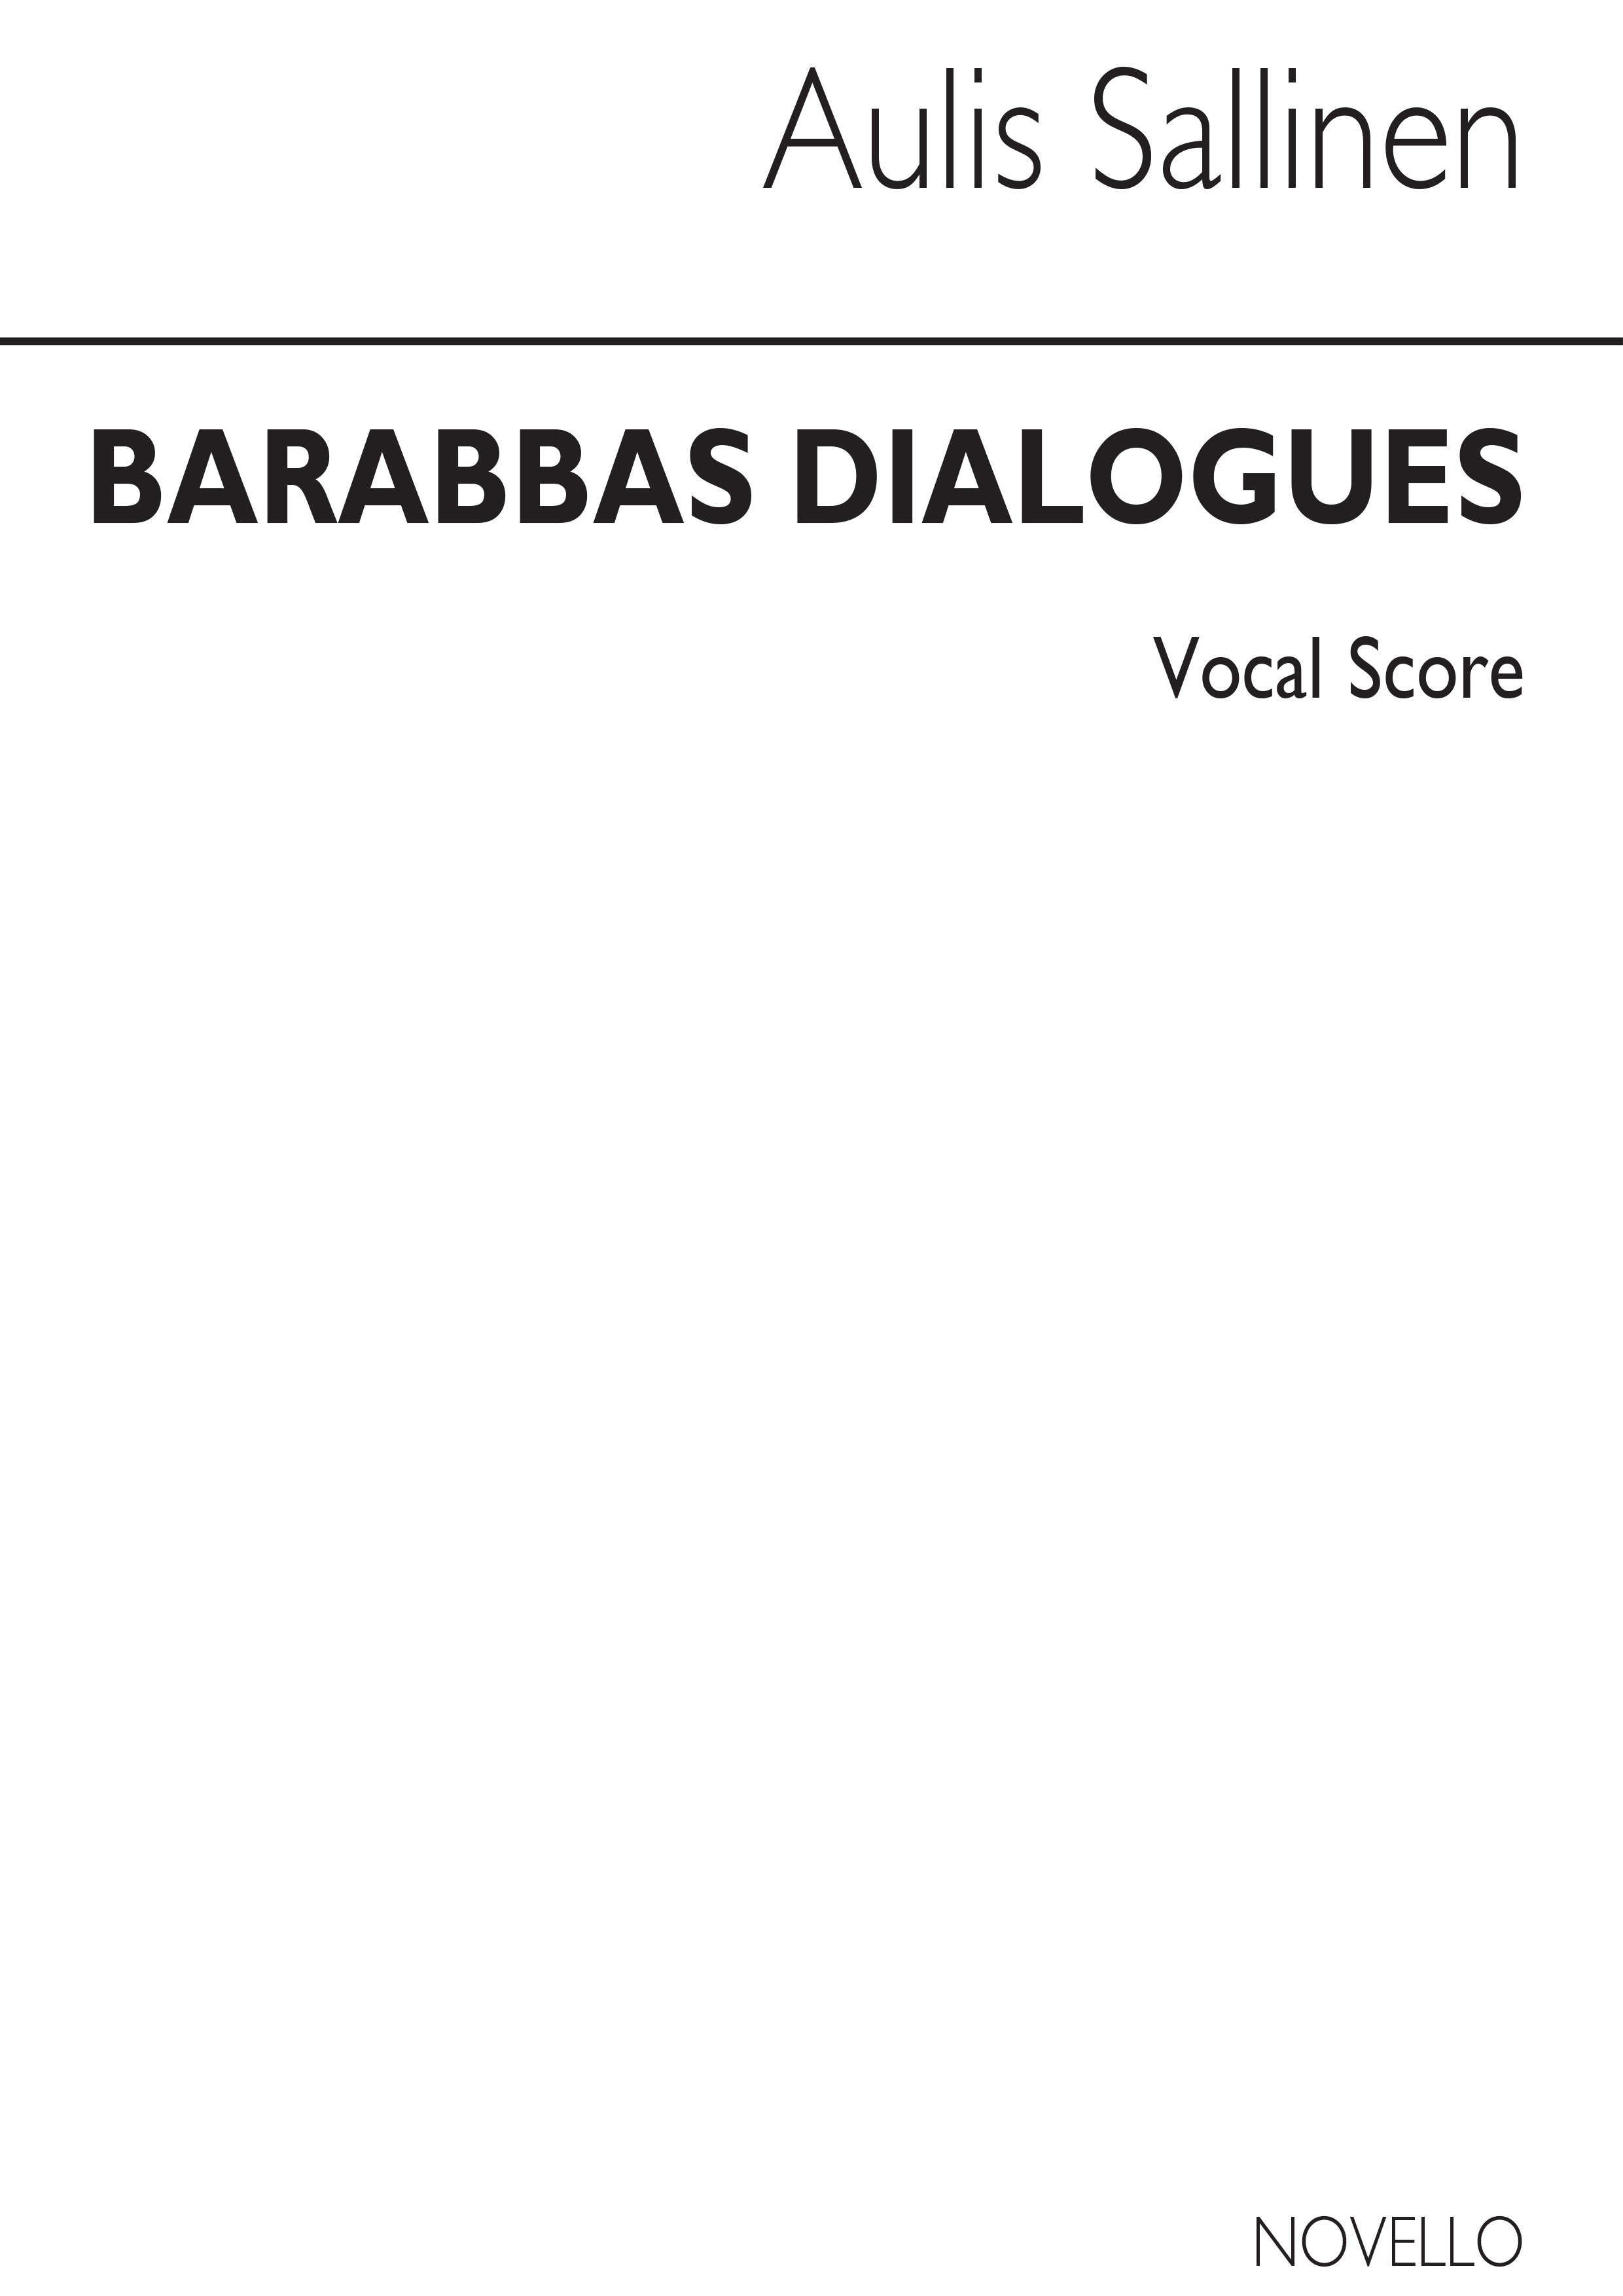 Aulis Sallinen: Barabbas Dialogeja (Barabbas Dialogues) Op.84: Ensemble: Vocal